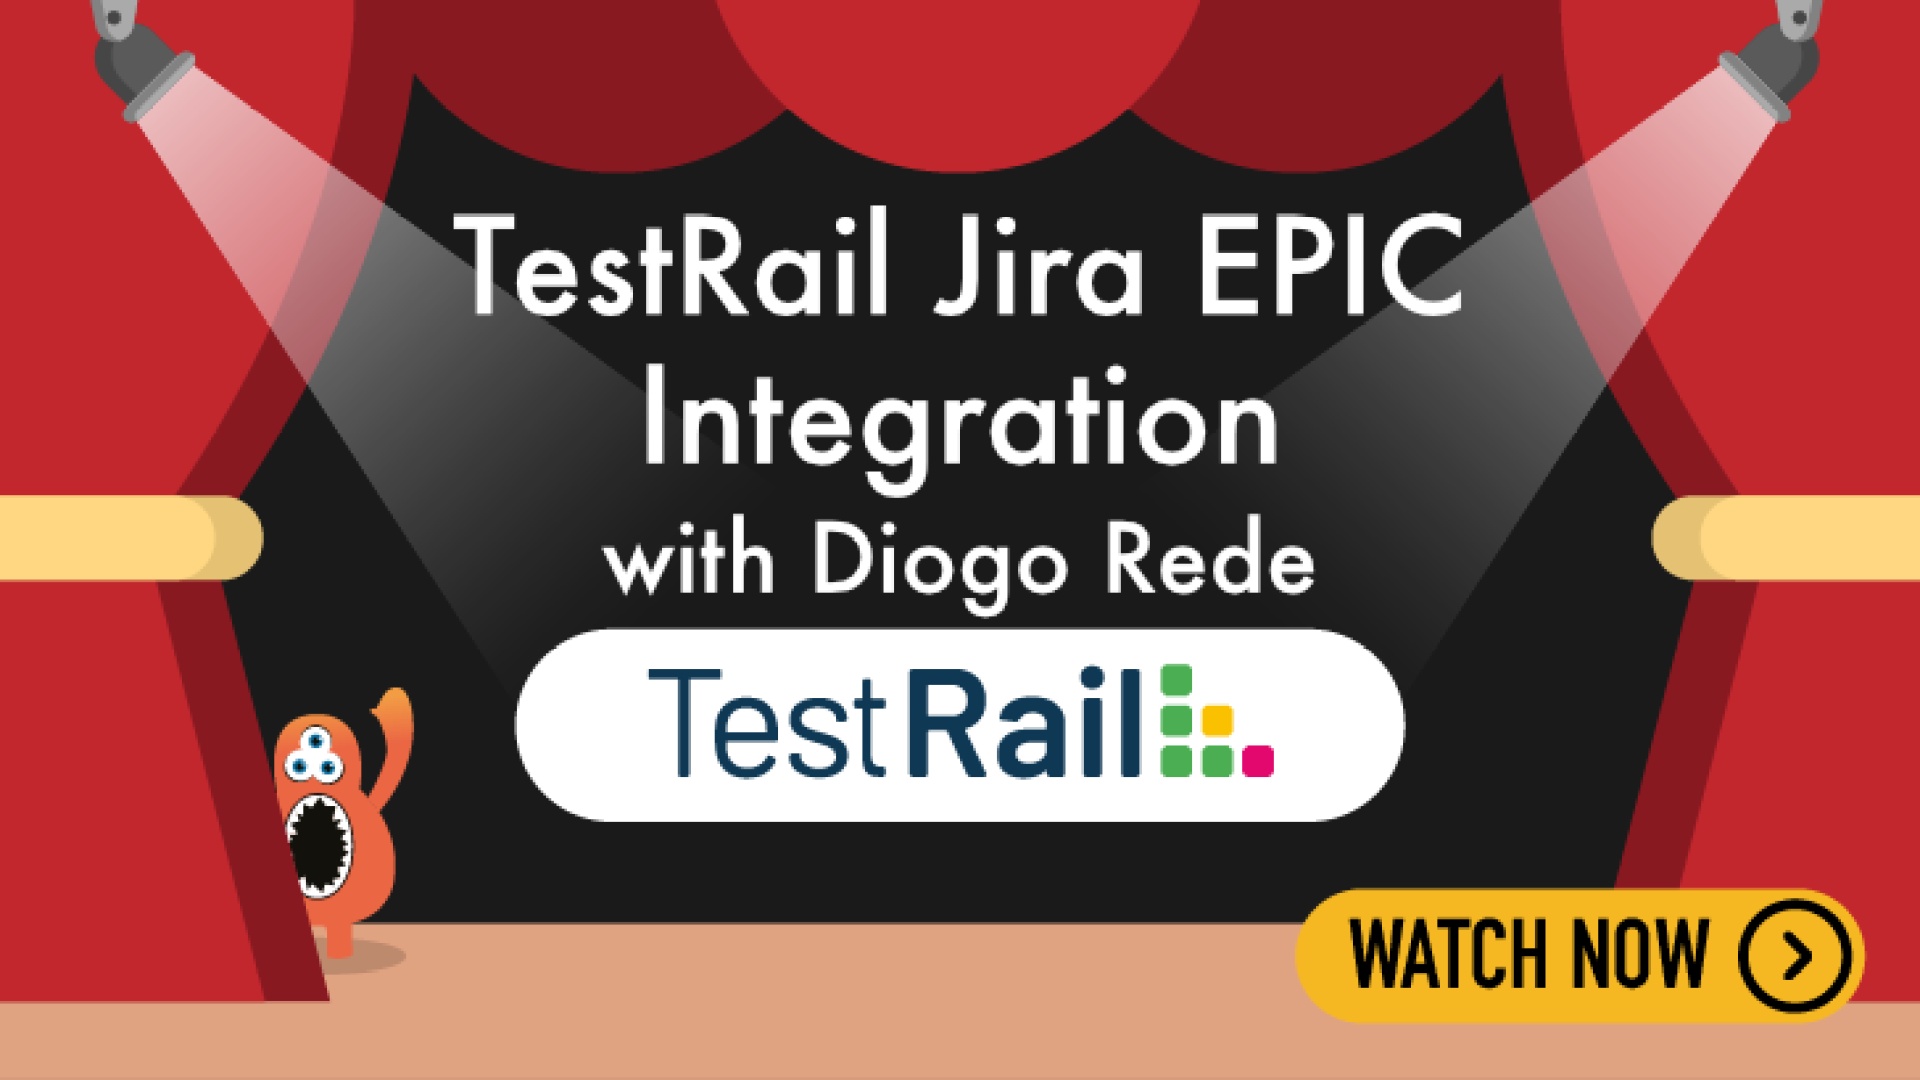 TestRail Jira EPIC Integration